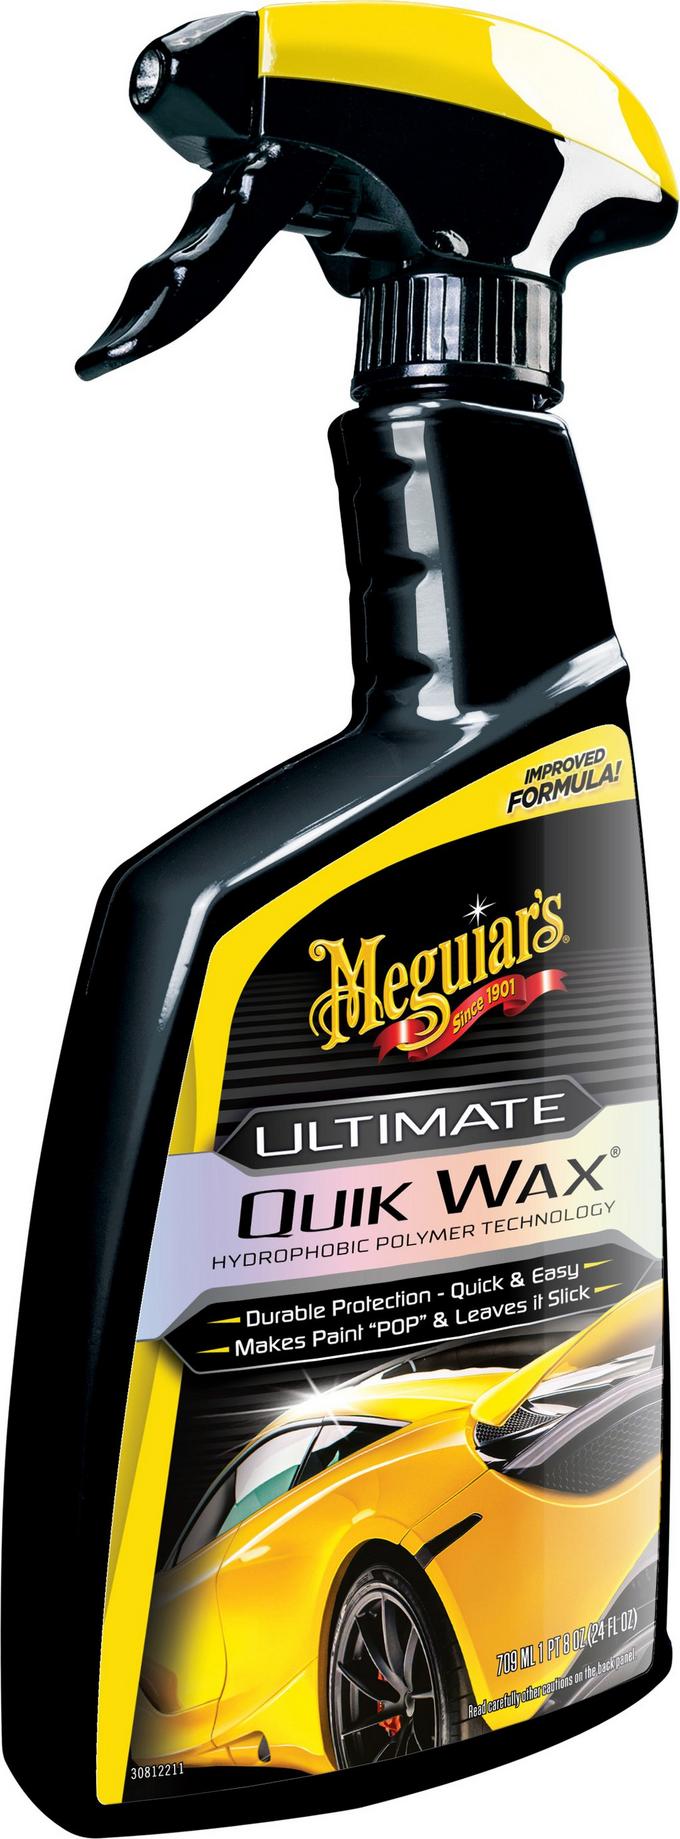 Meguiars Ultimate Wash & Wax 1.42 Litre